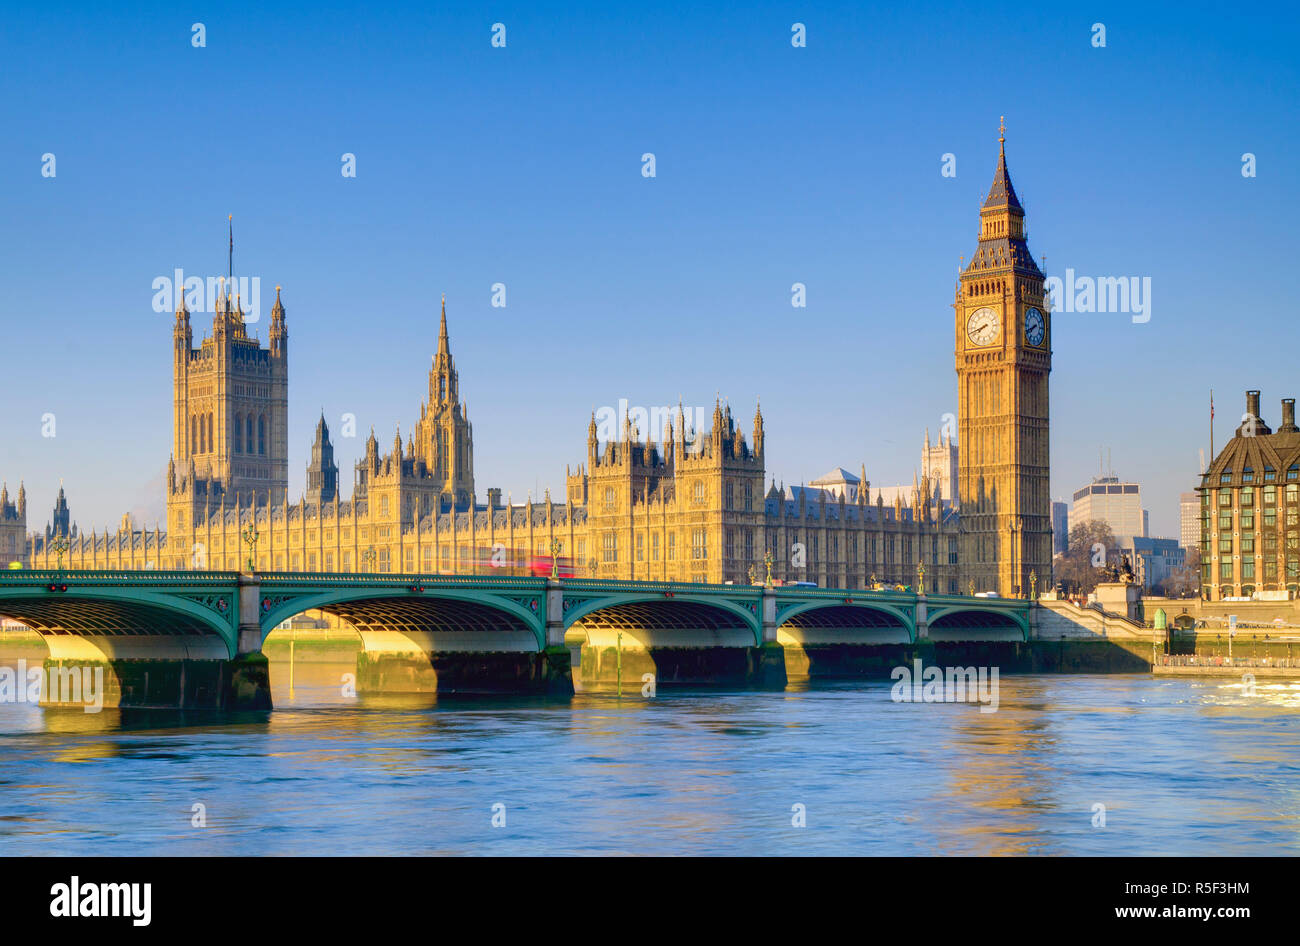 UK, England, London, River Thames and Big Ben Stock Photo